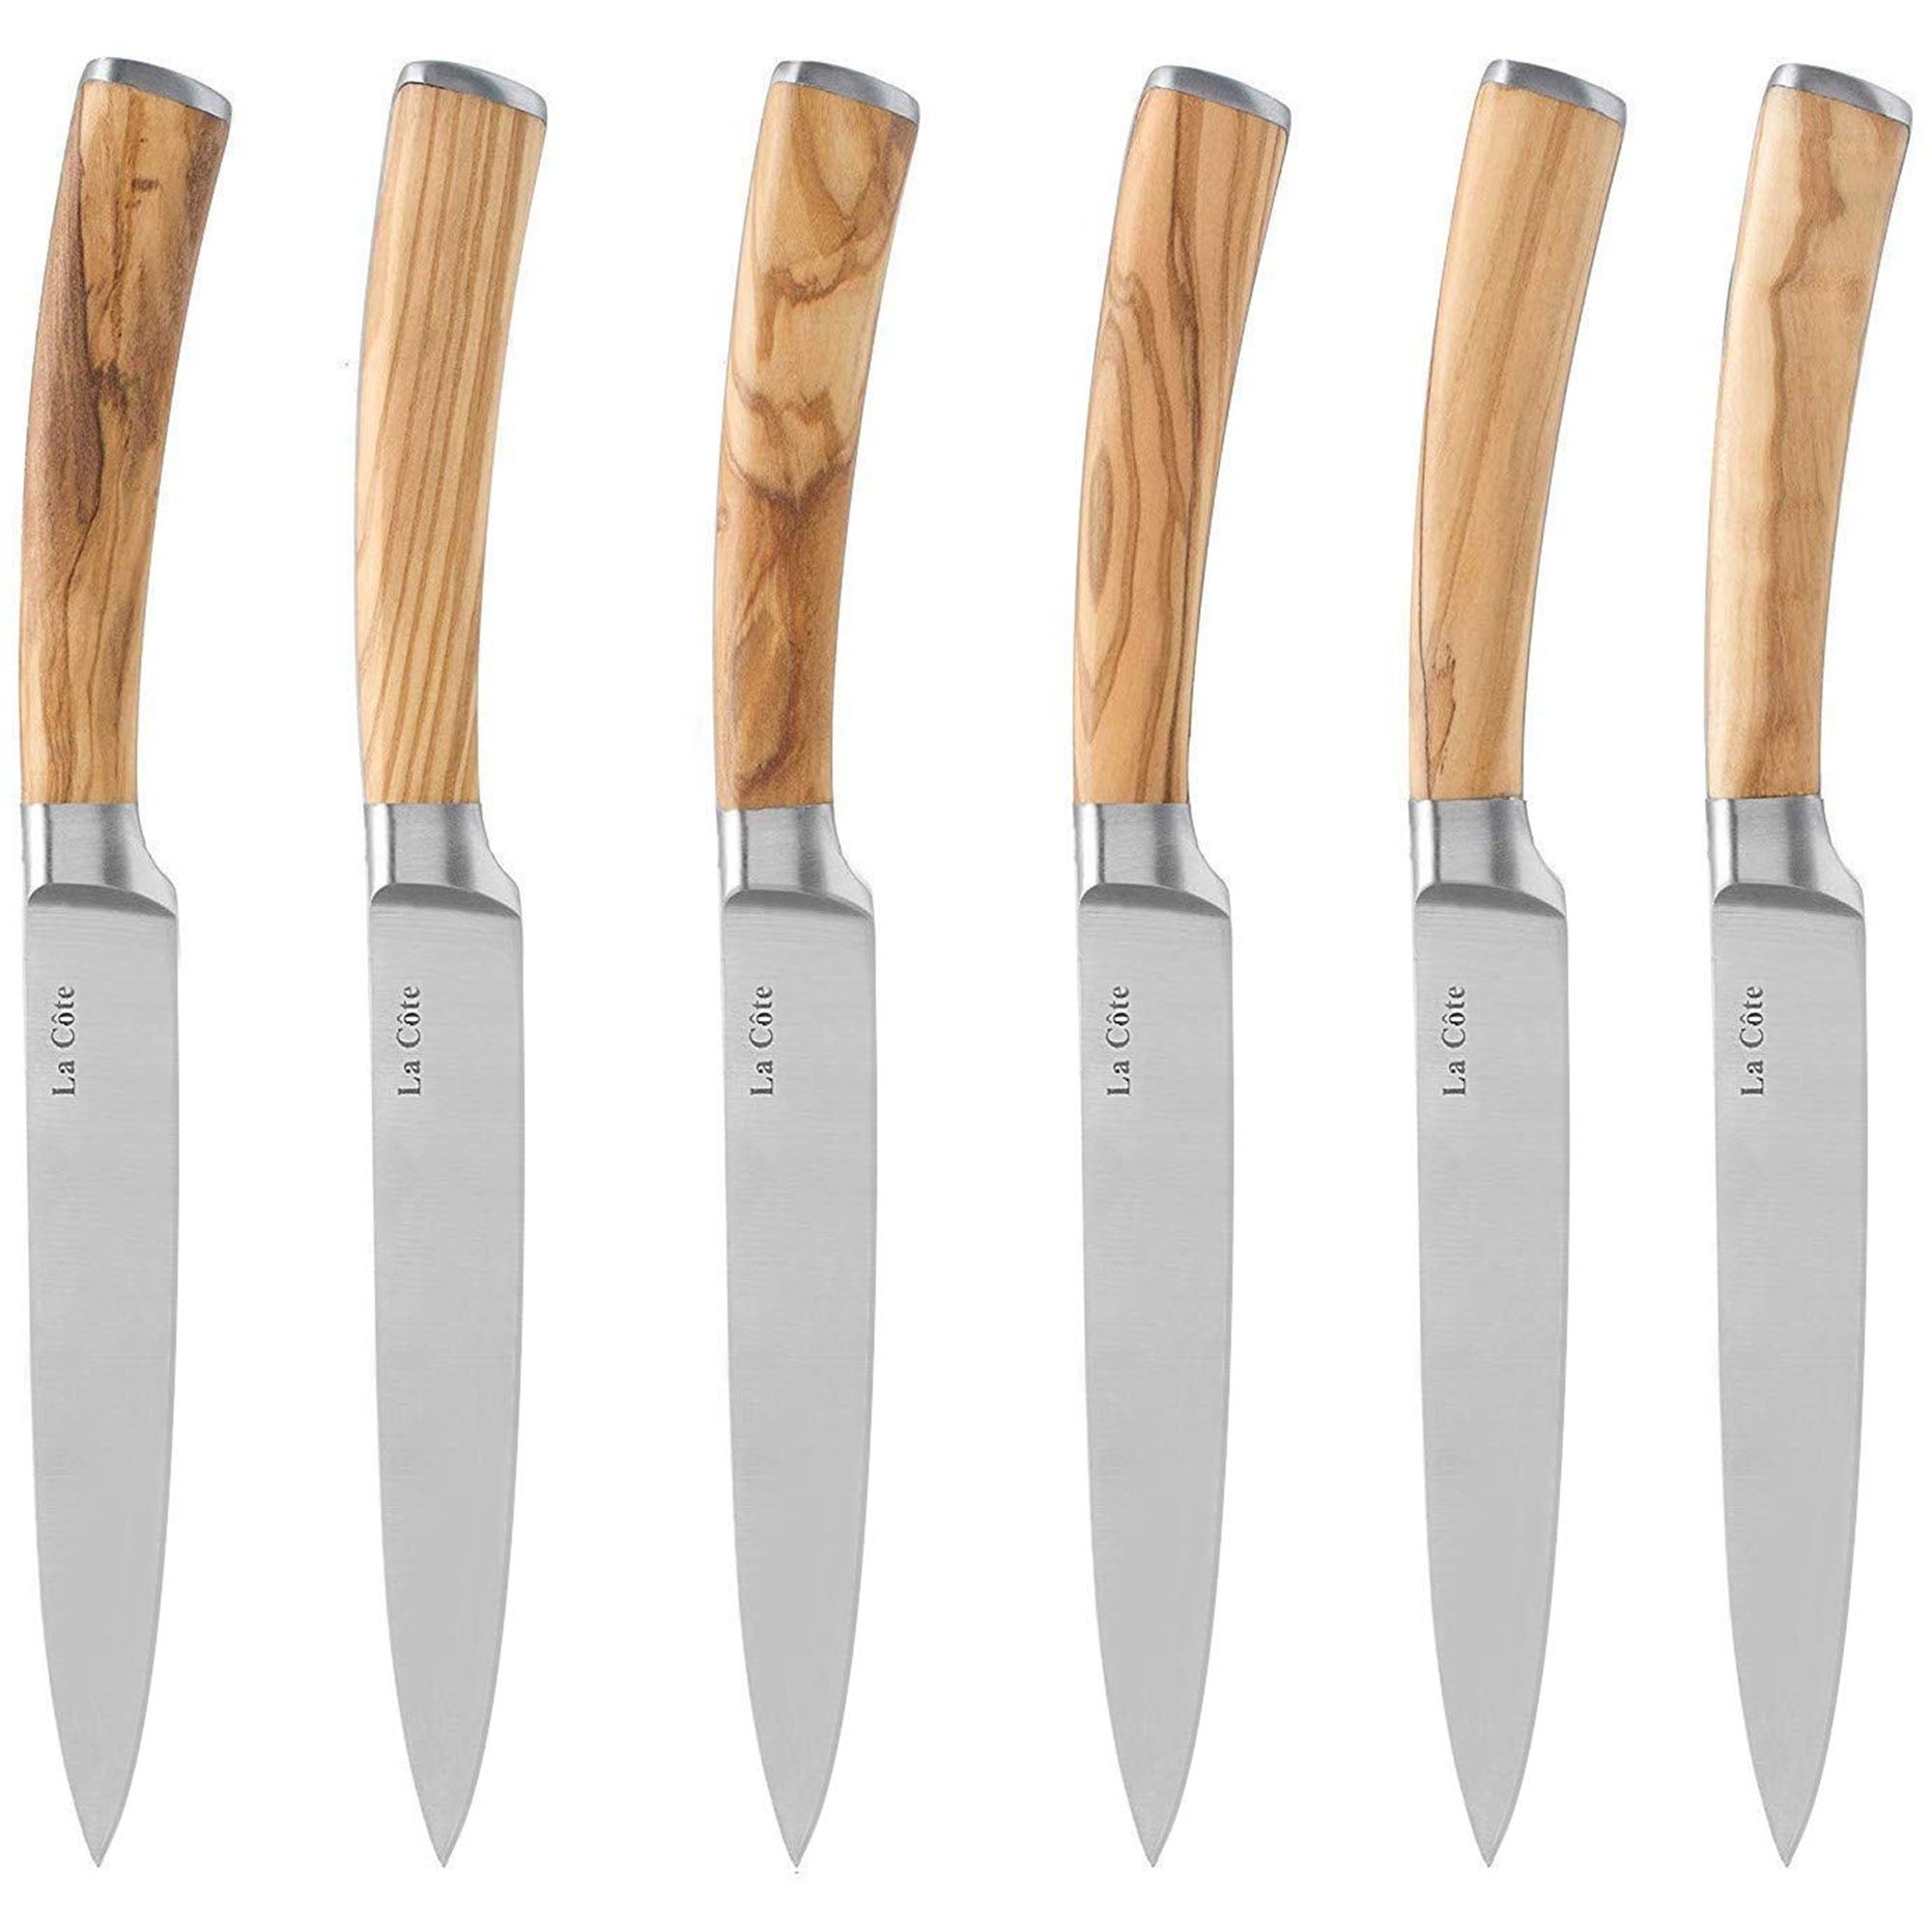 La Cote 6 Piece Olive Wood Steak Knives Set Straight Edge Non Serrated Blades in gift box